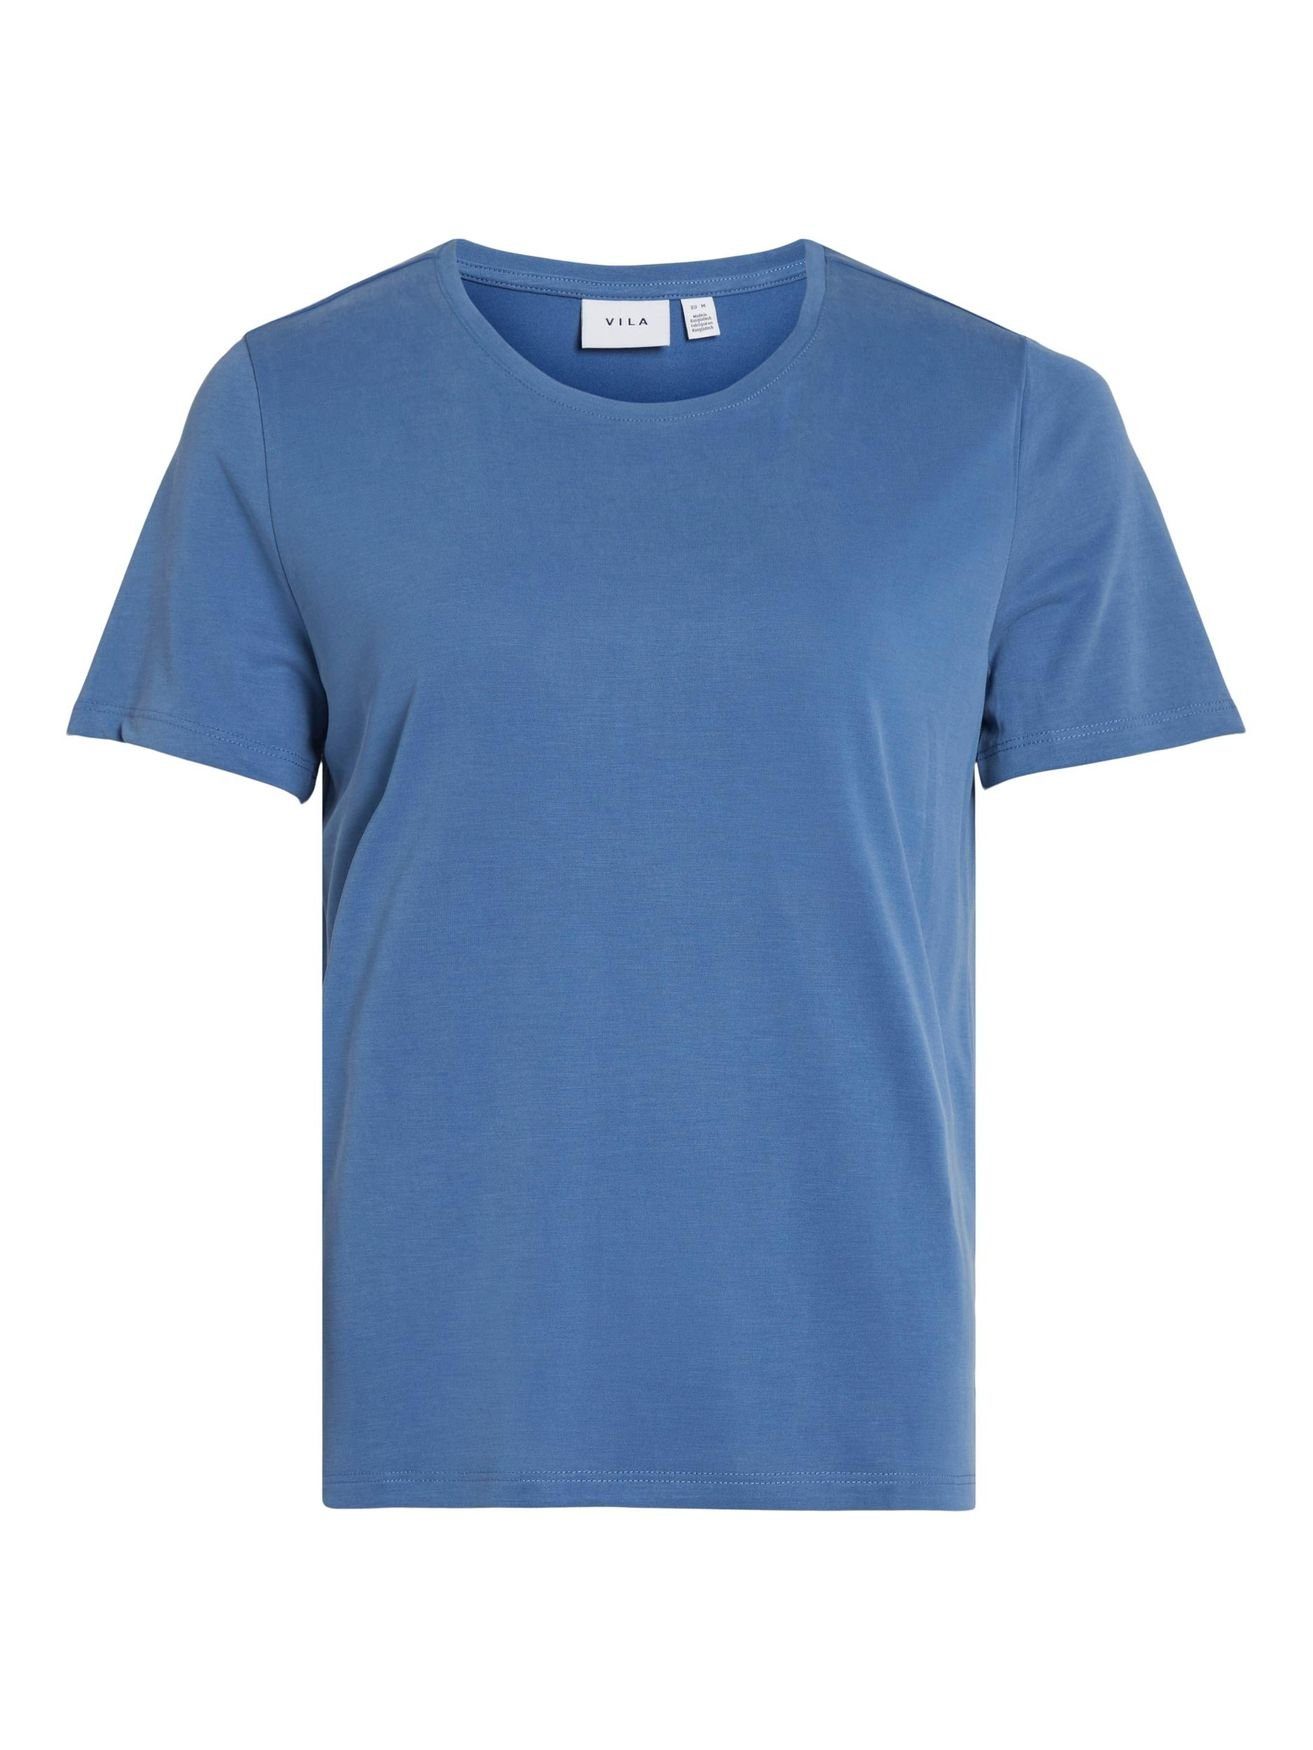 Vila 4870 T-Shirt Kurzarm Basic T-Shirt VIMODALA Blau in Rundhals Top Oberteil